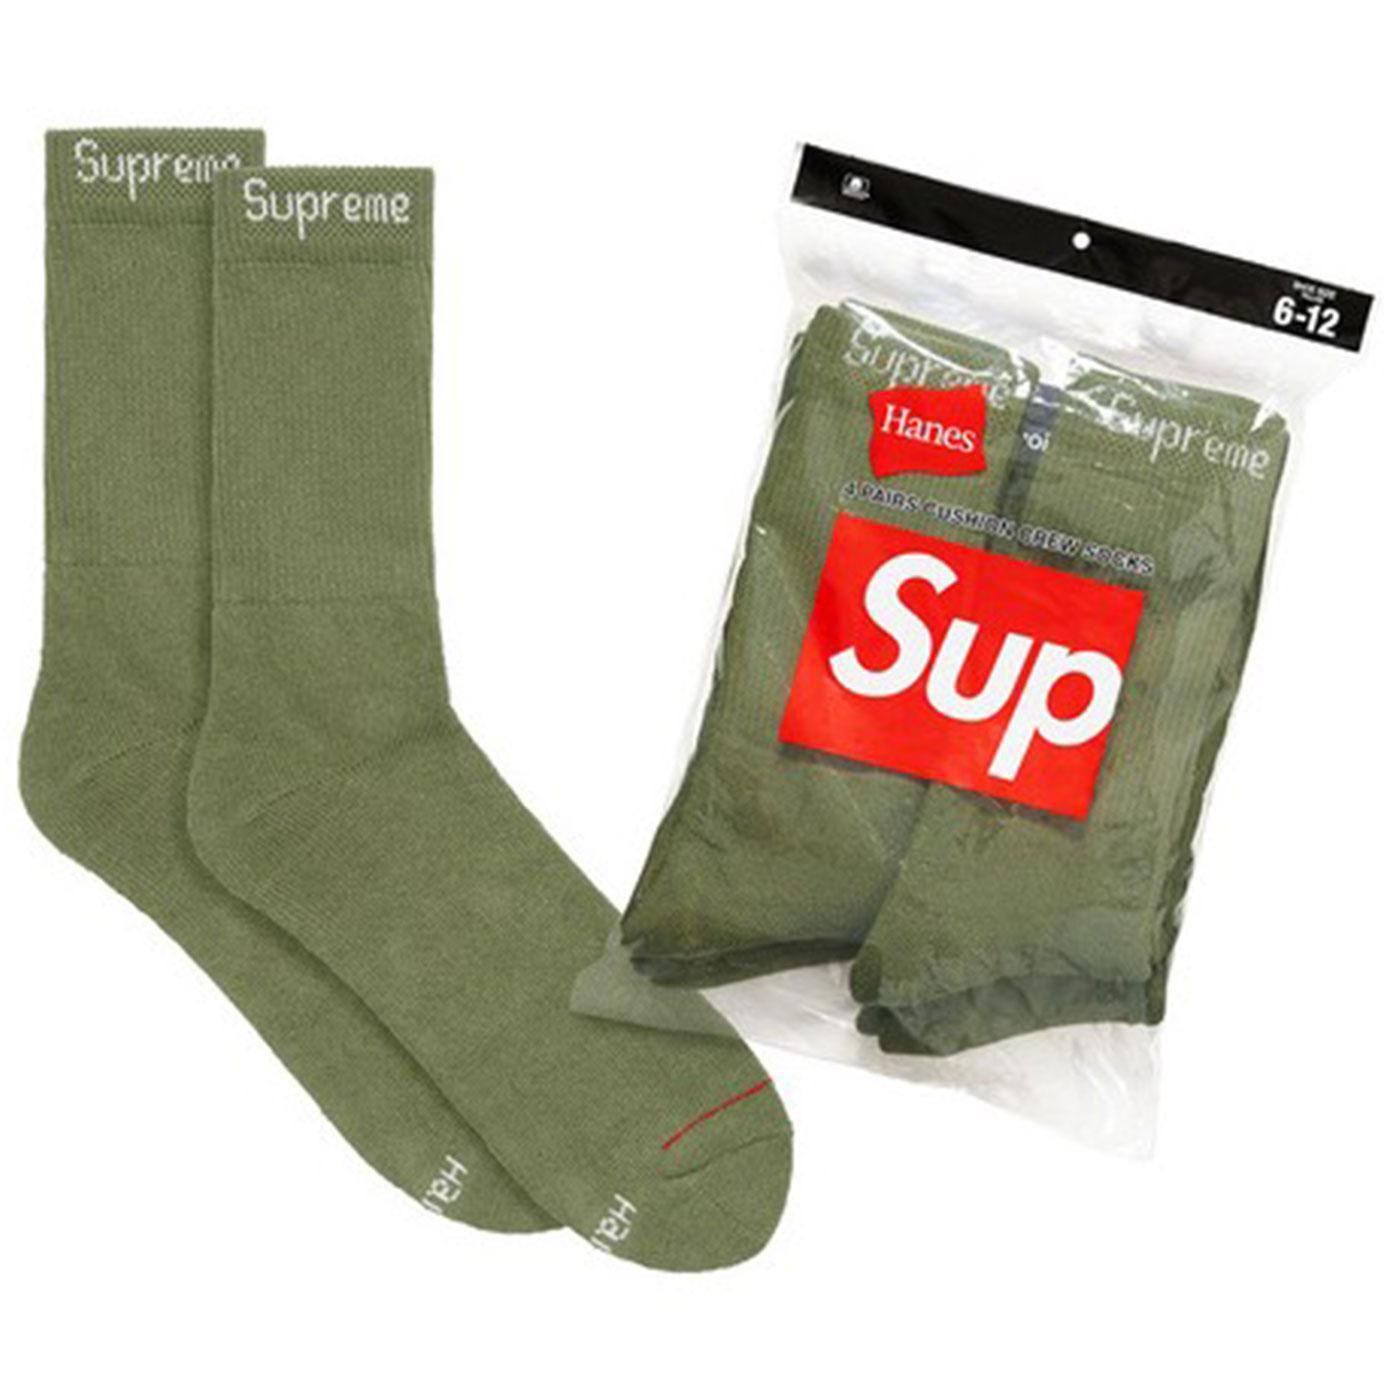 Supreme x Hanes Crew Socks (Olive)